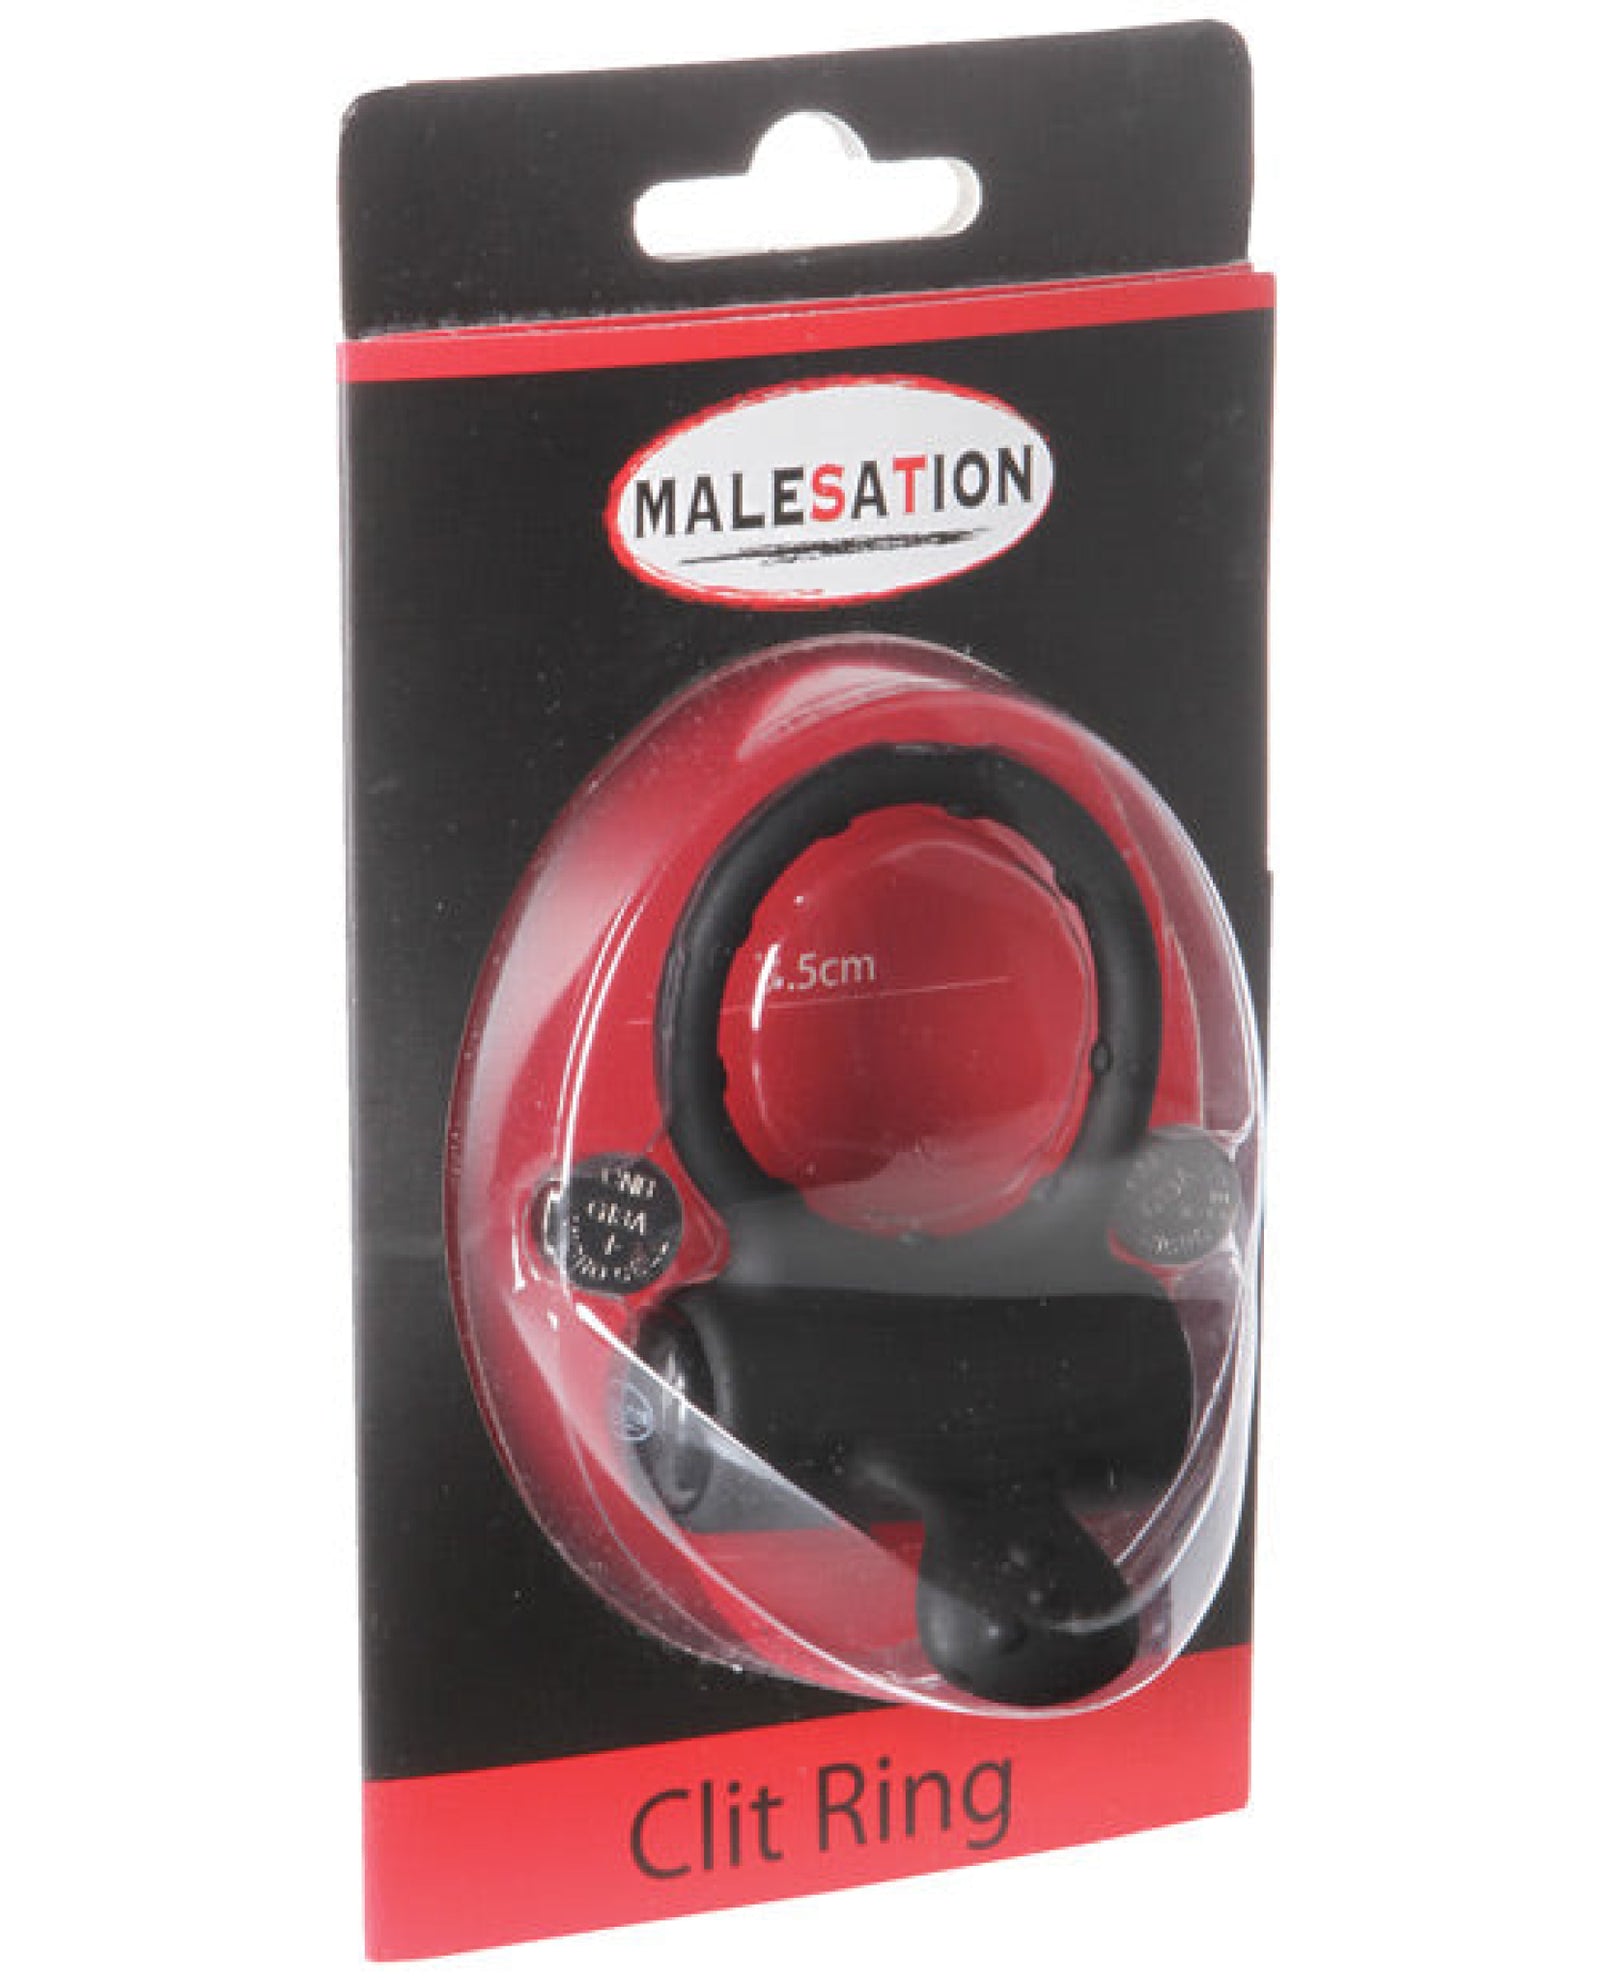 Malesation Clit Ring - Black Malesation